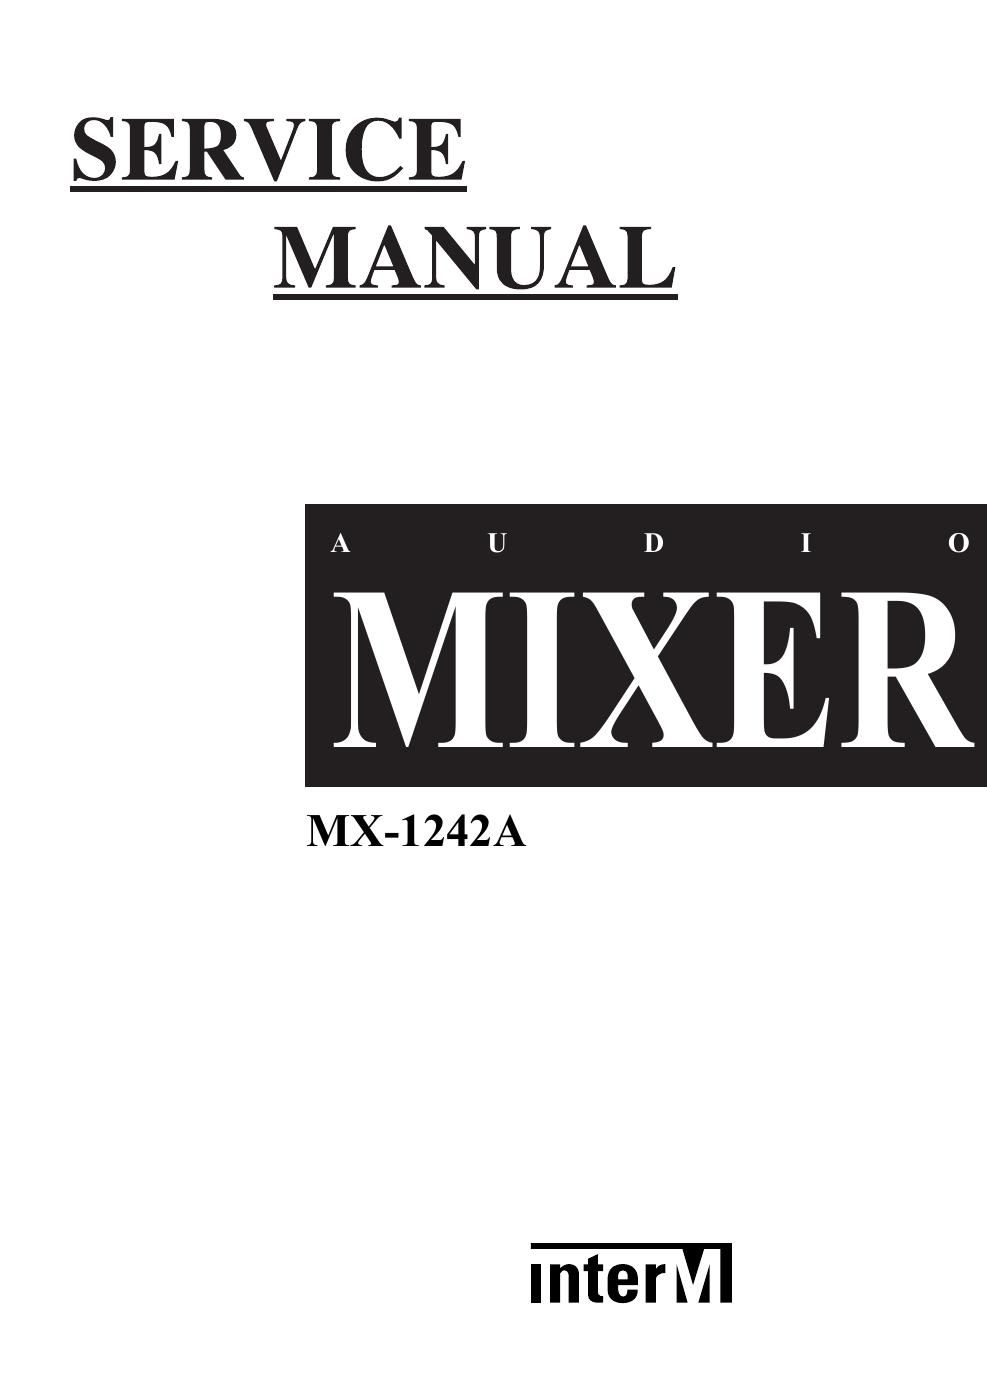 interm mx 1242a mixer